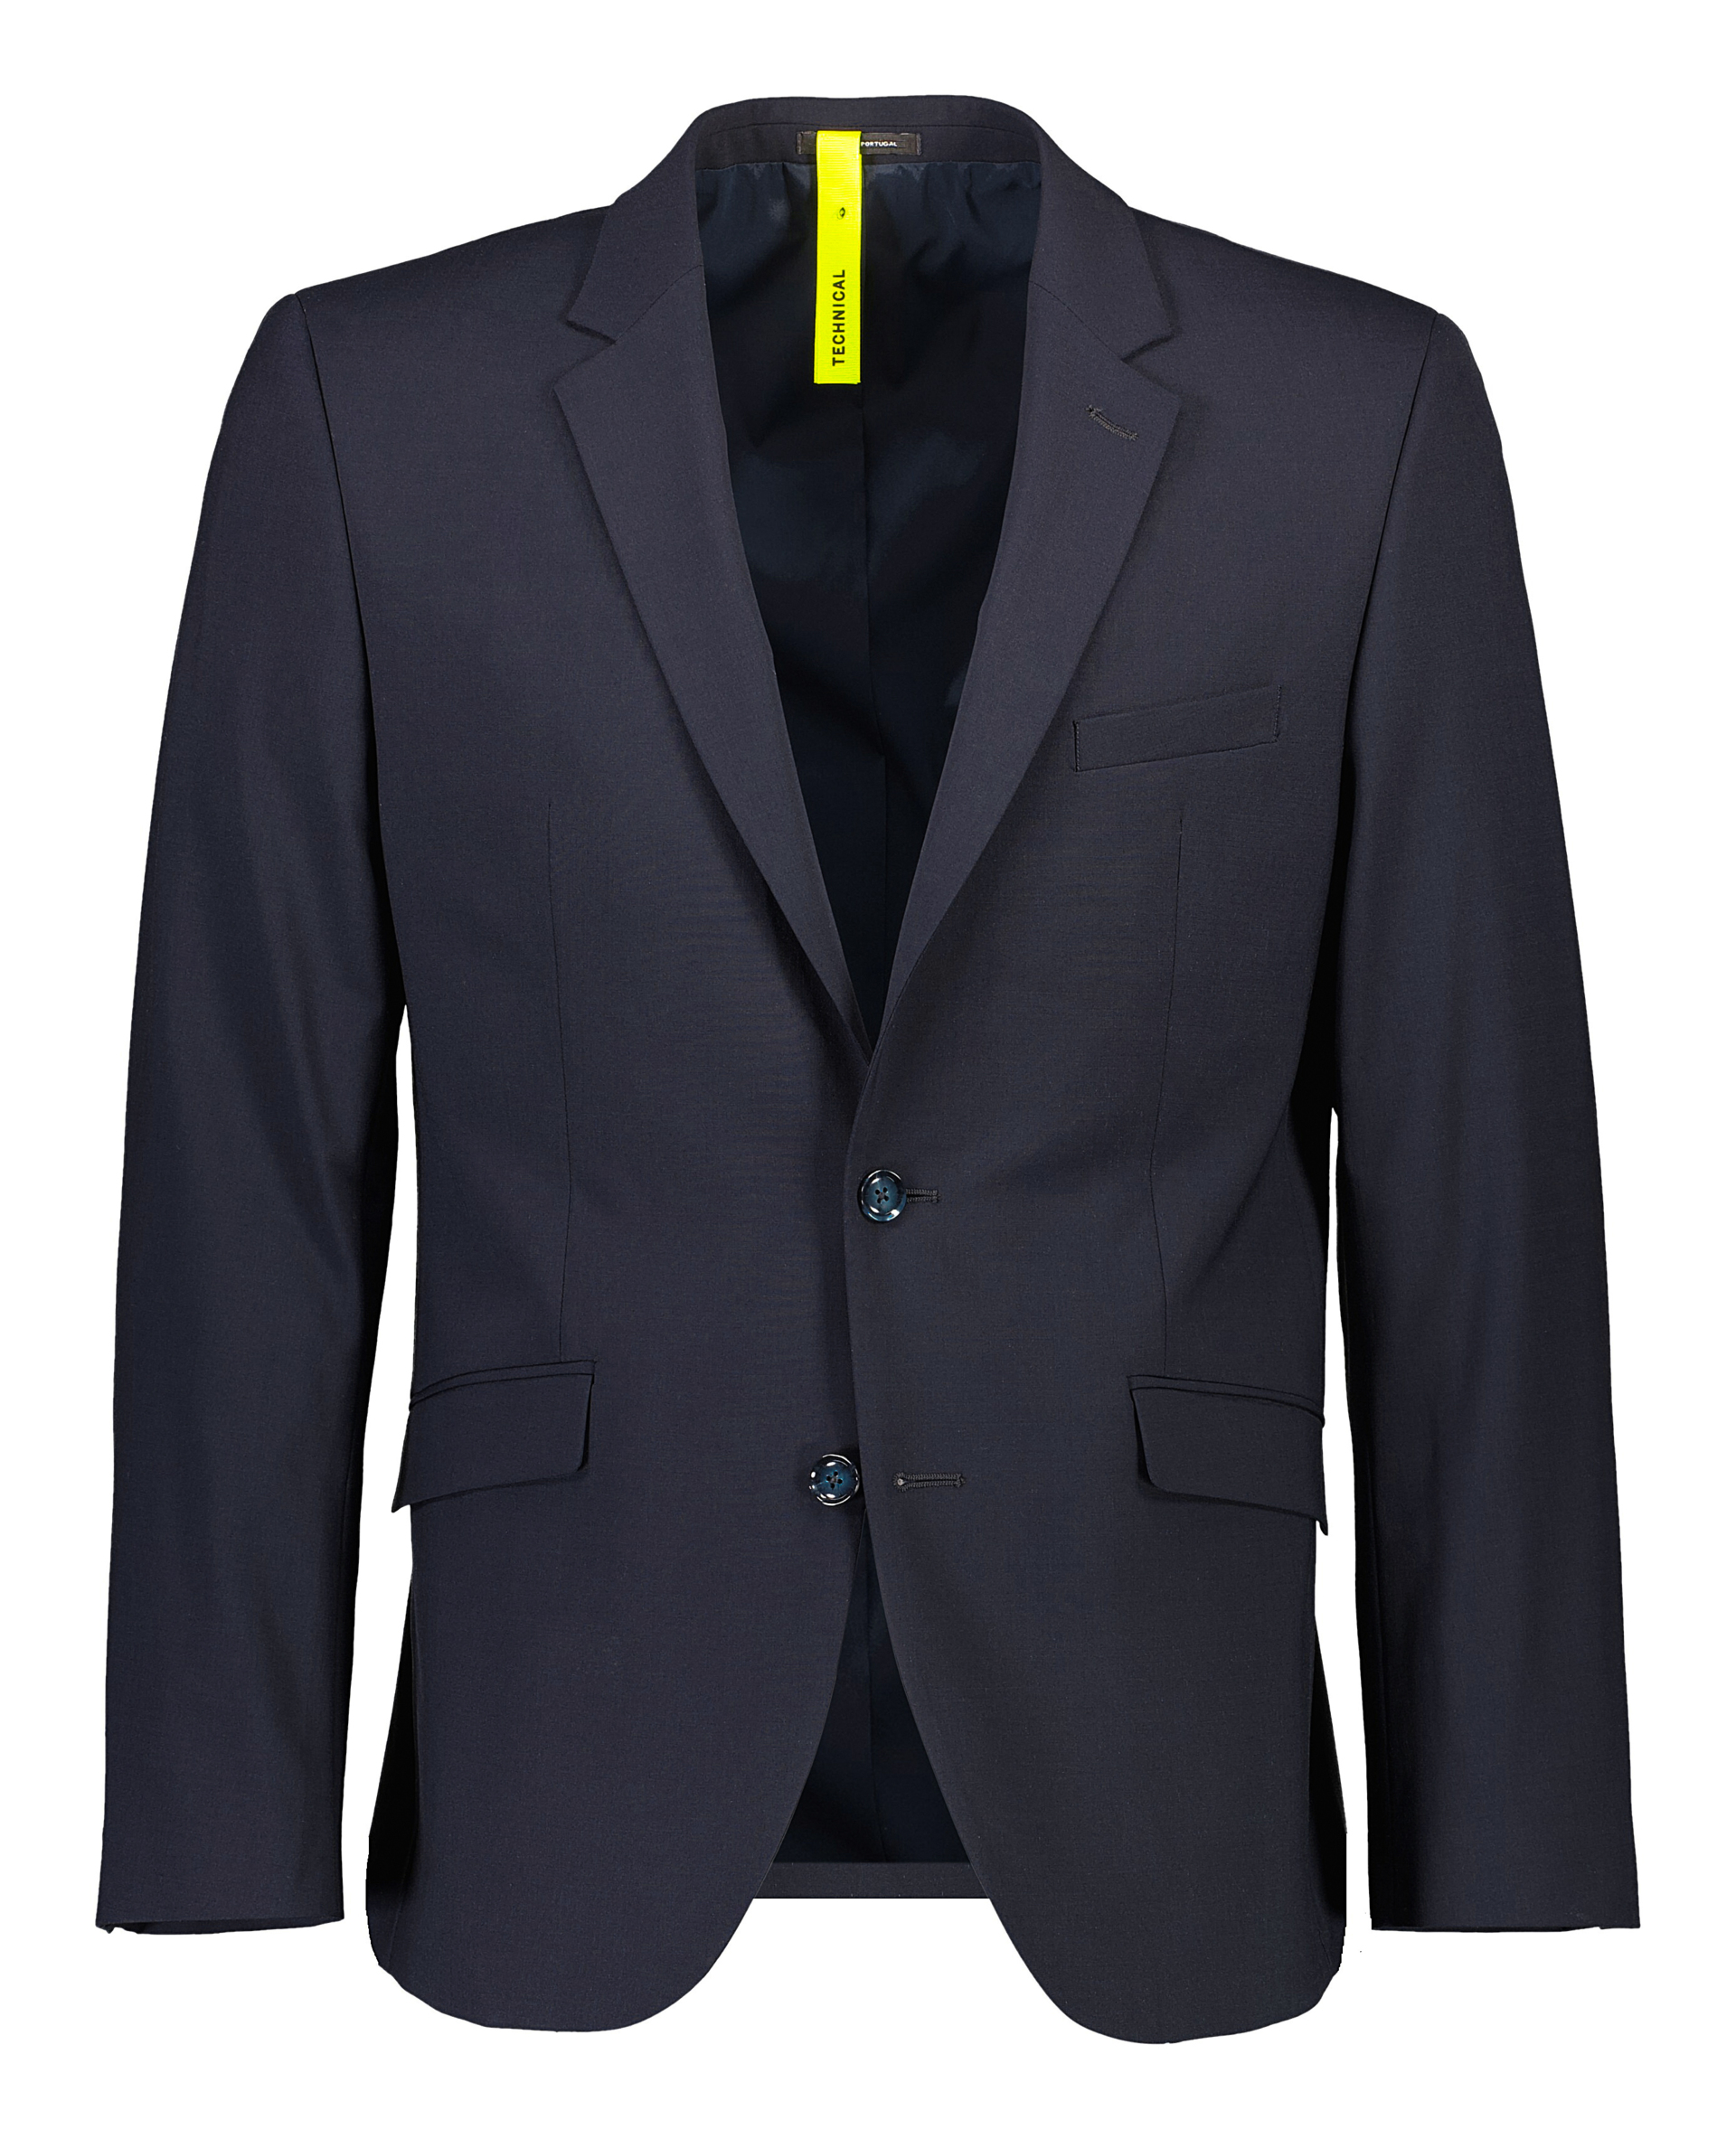 Lindbergh Suit jacket blue / navy